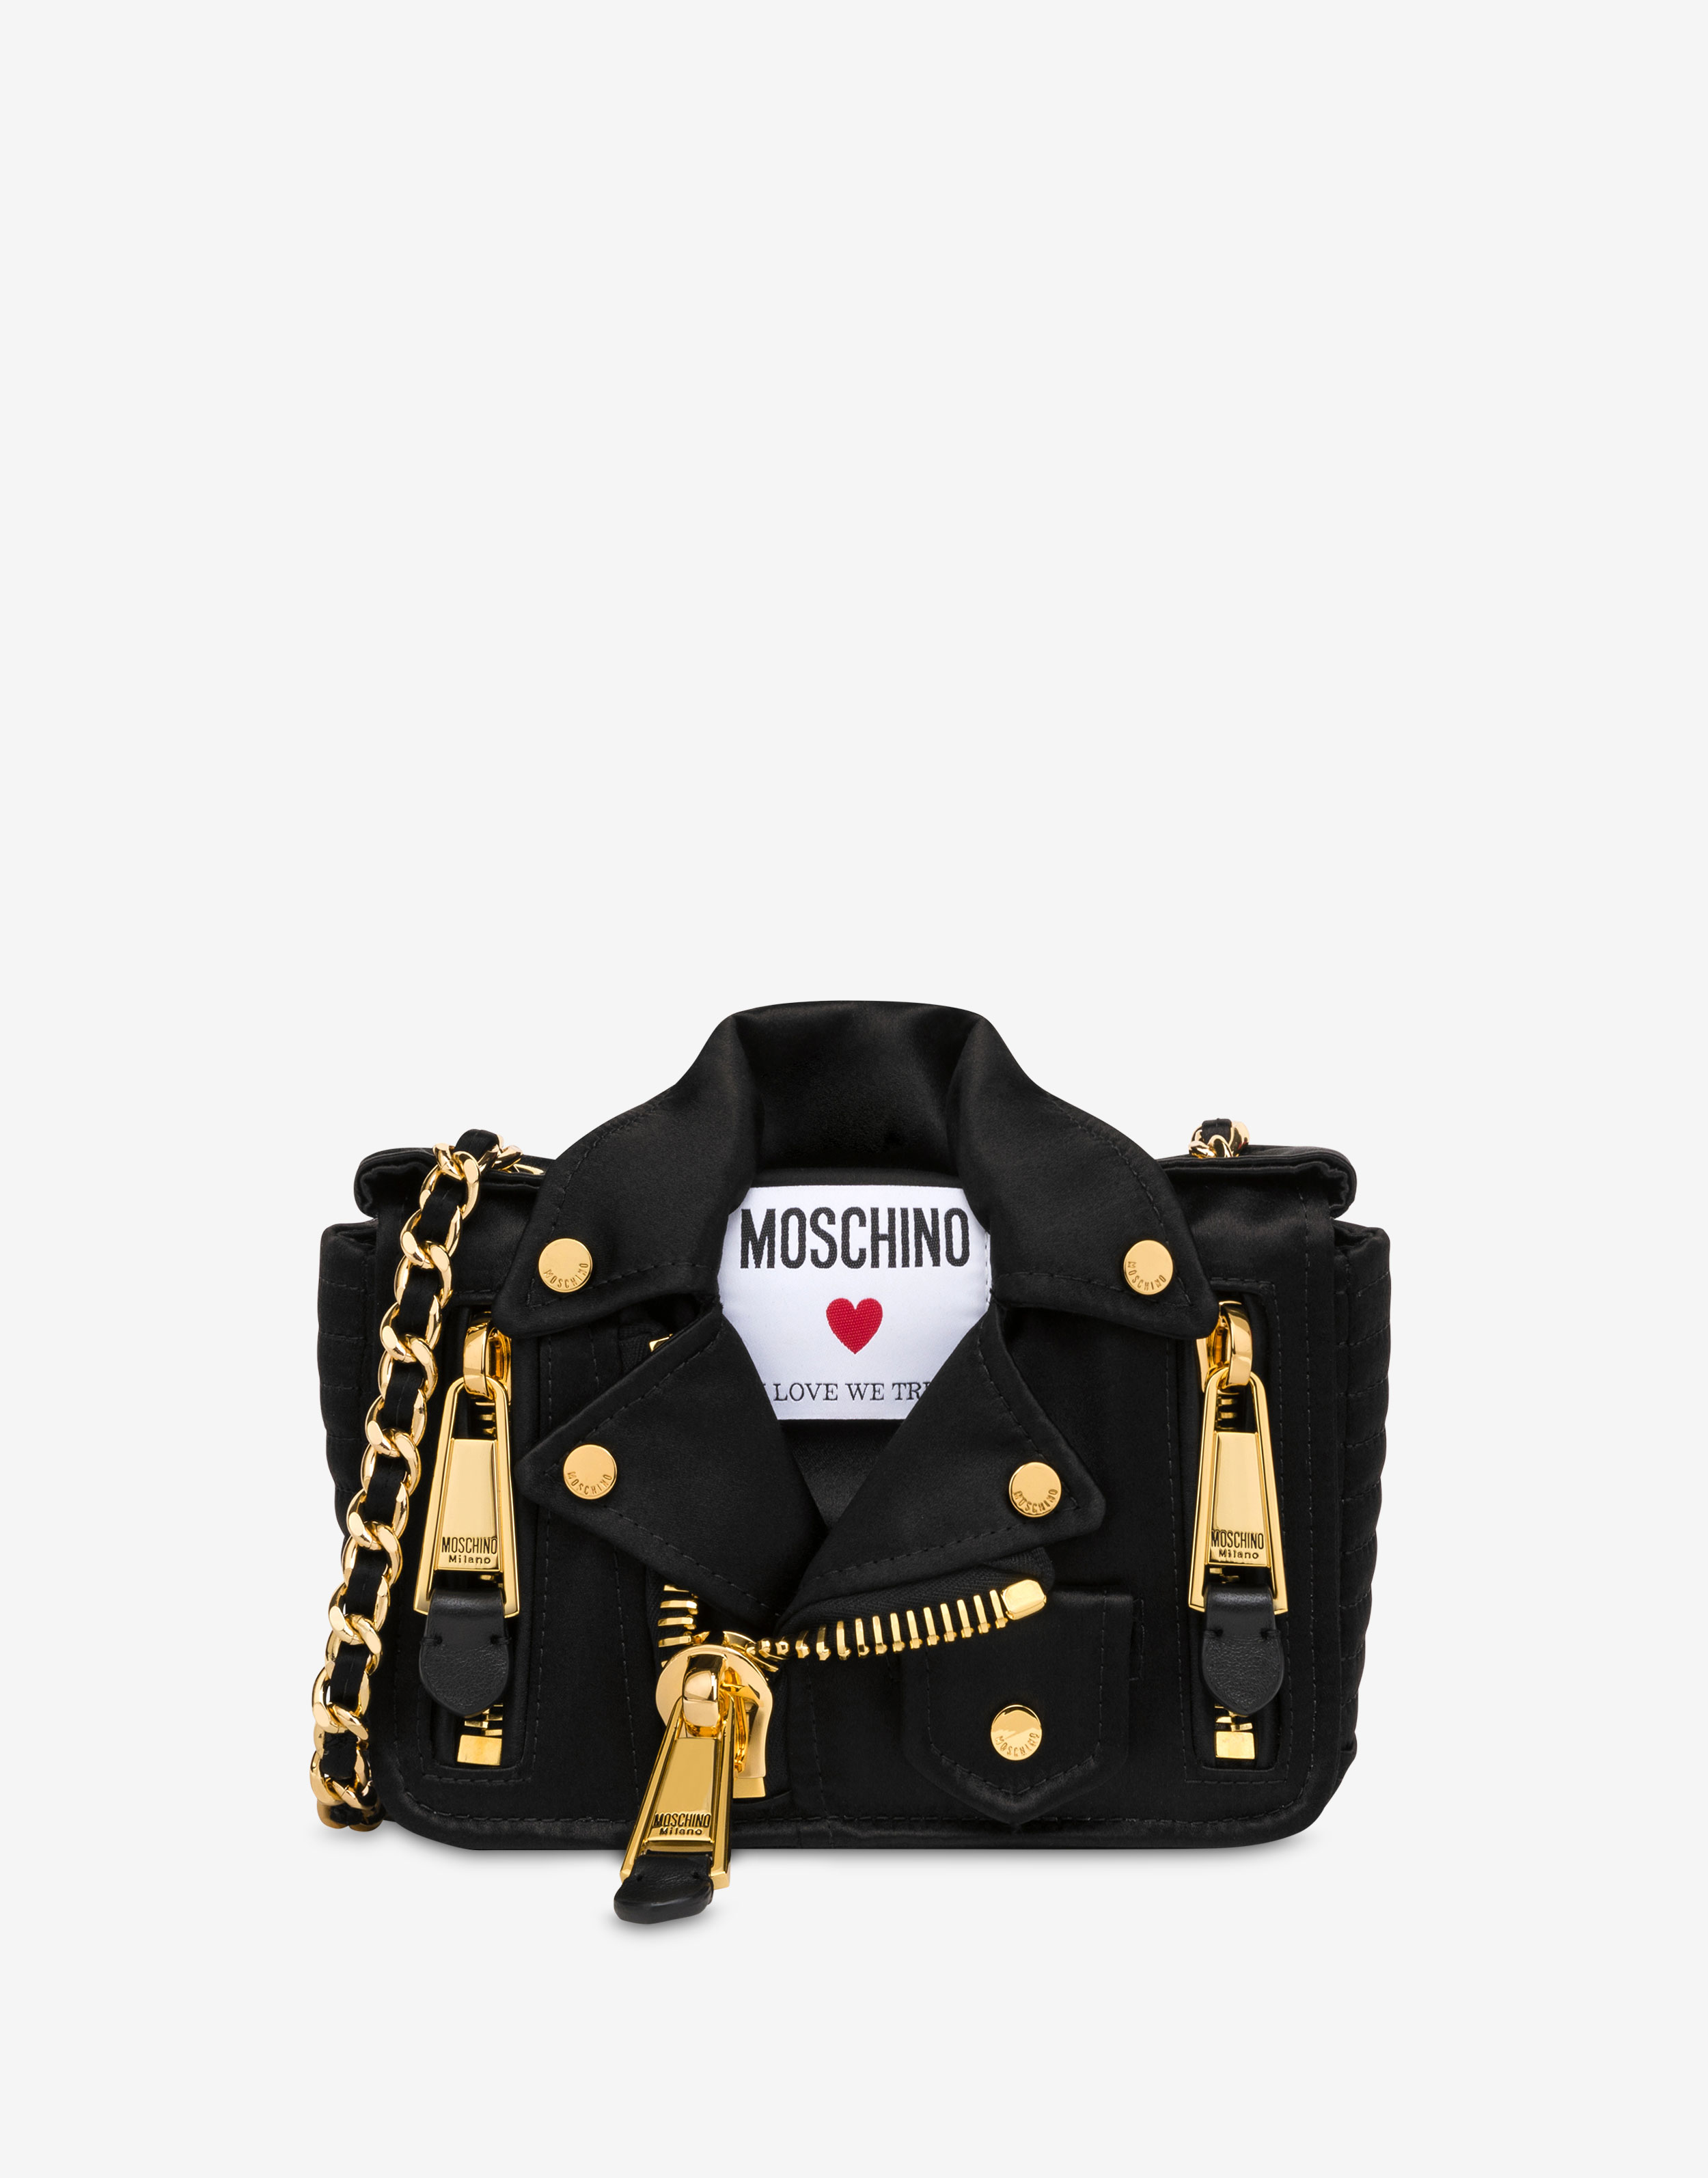 Moschino Handbags on Sale | ShopStyle